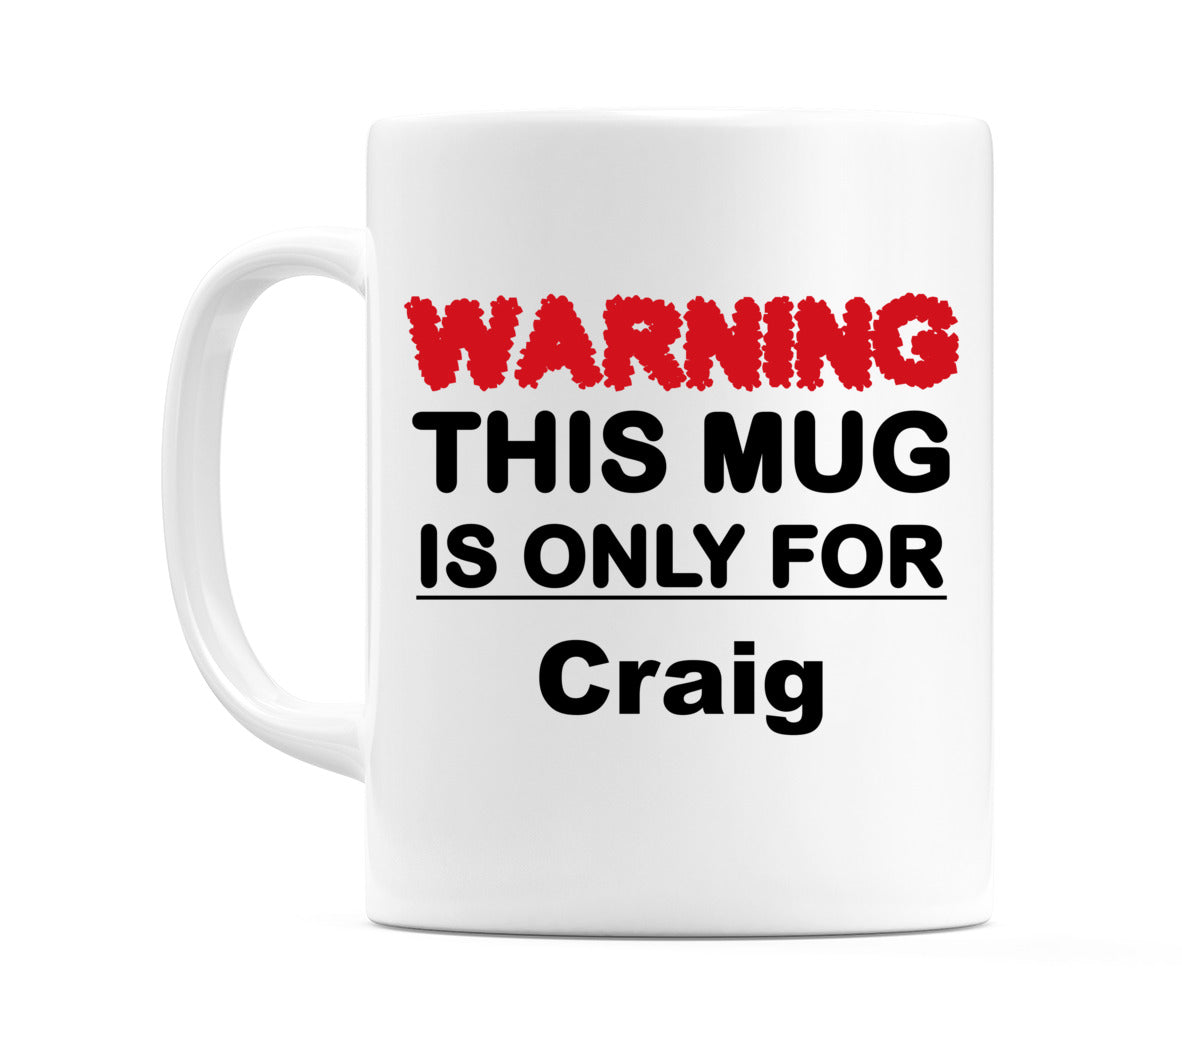 Warning This Mug is ONLY for Craig Mug